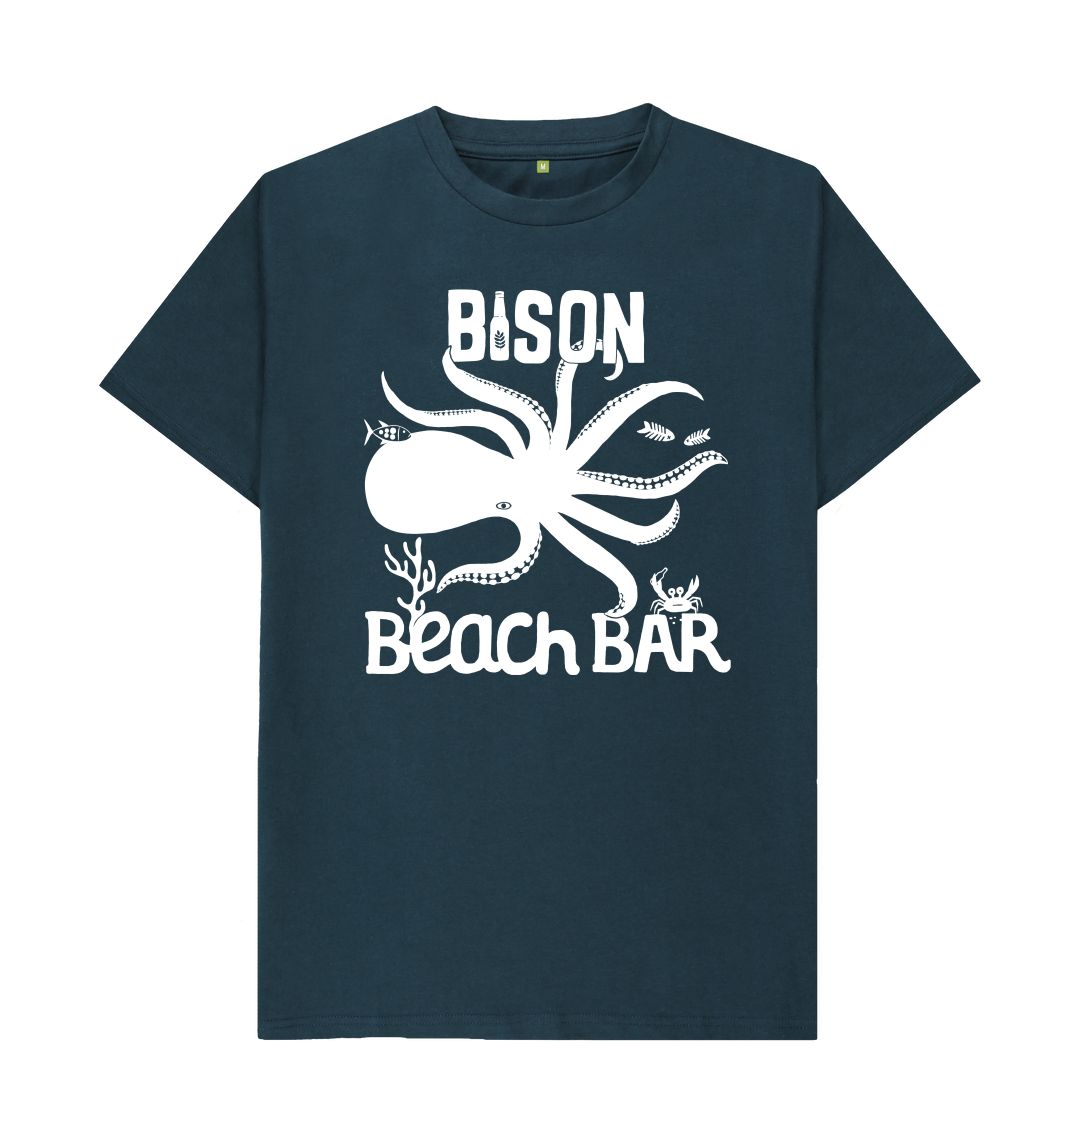 Denim Blue Bison Beach Bar Tee